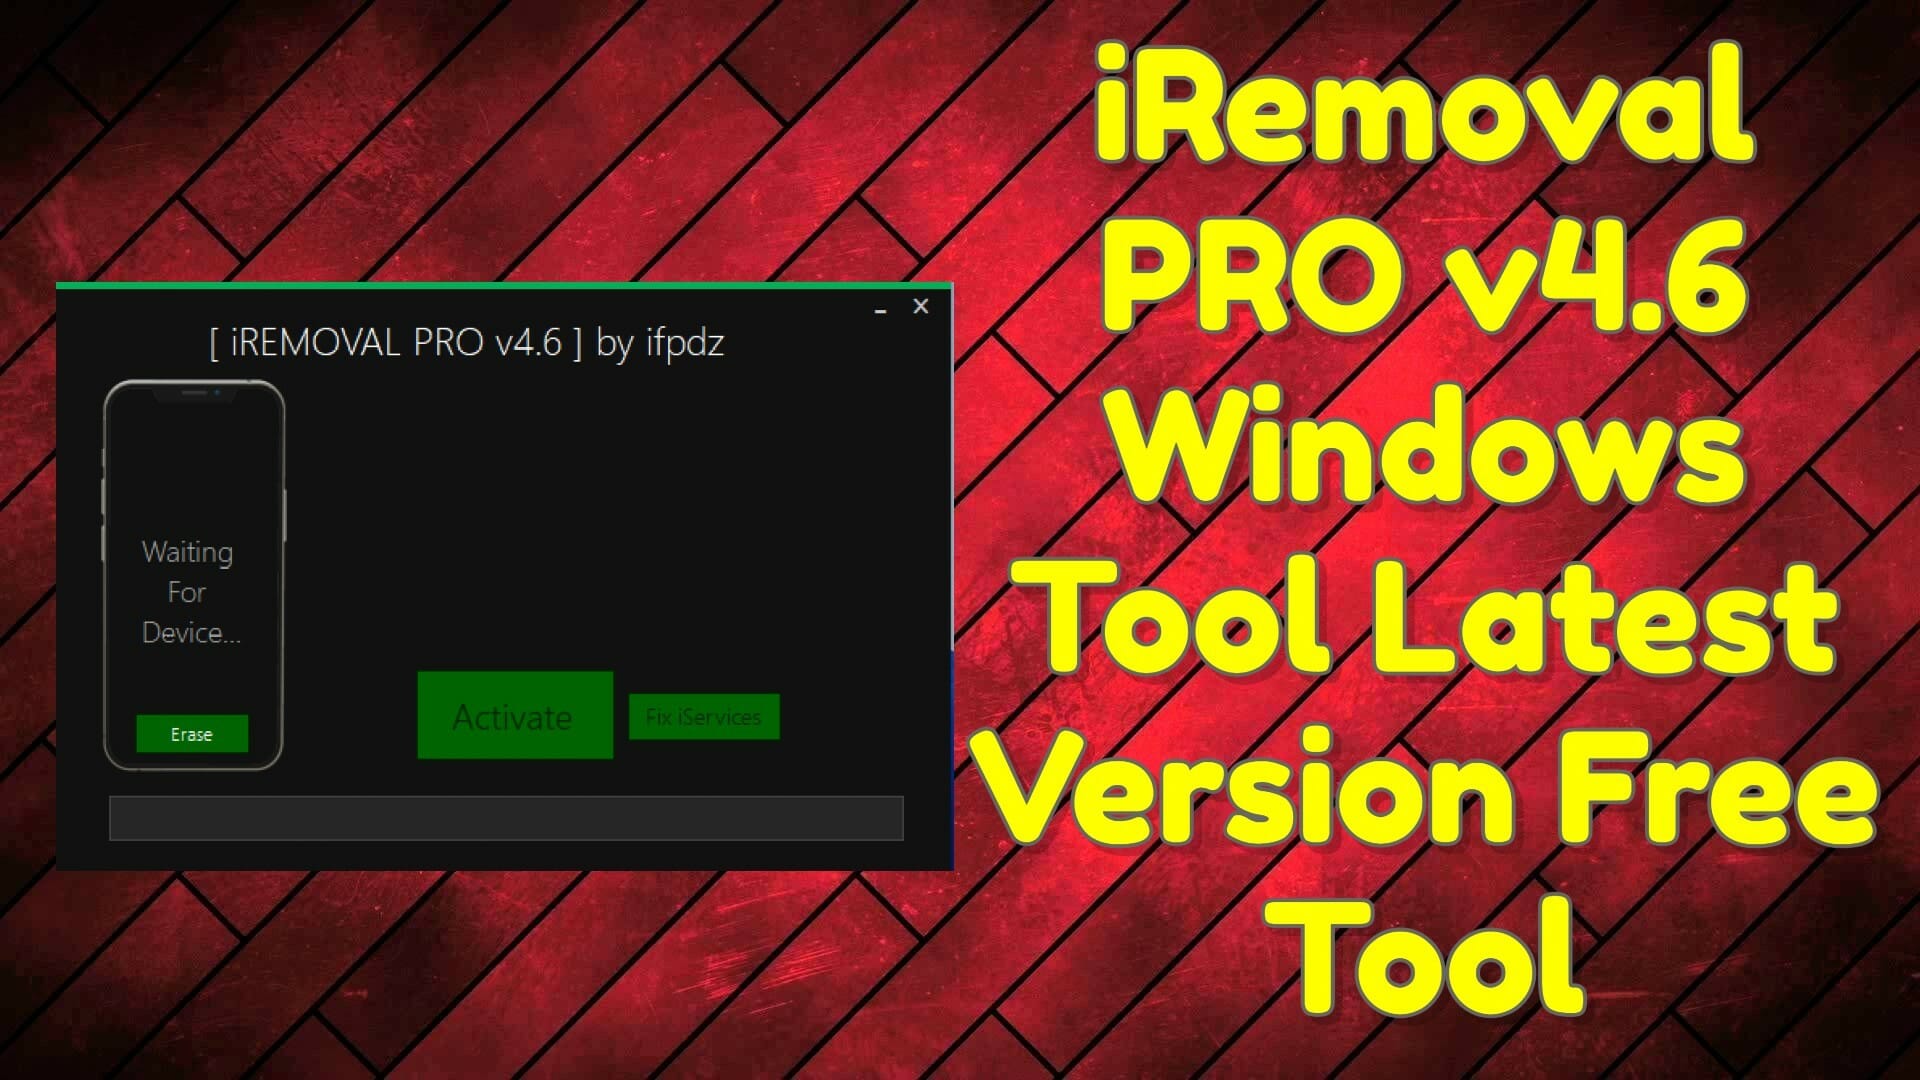 iRemoval PRO v4.6 Latest Version Windows Tool